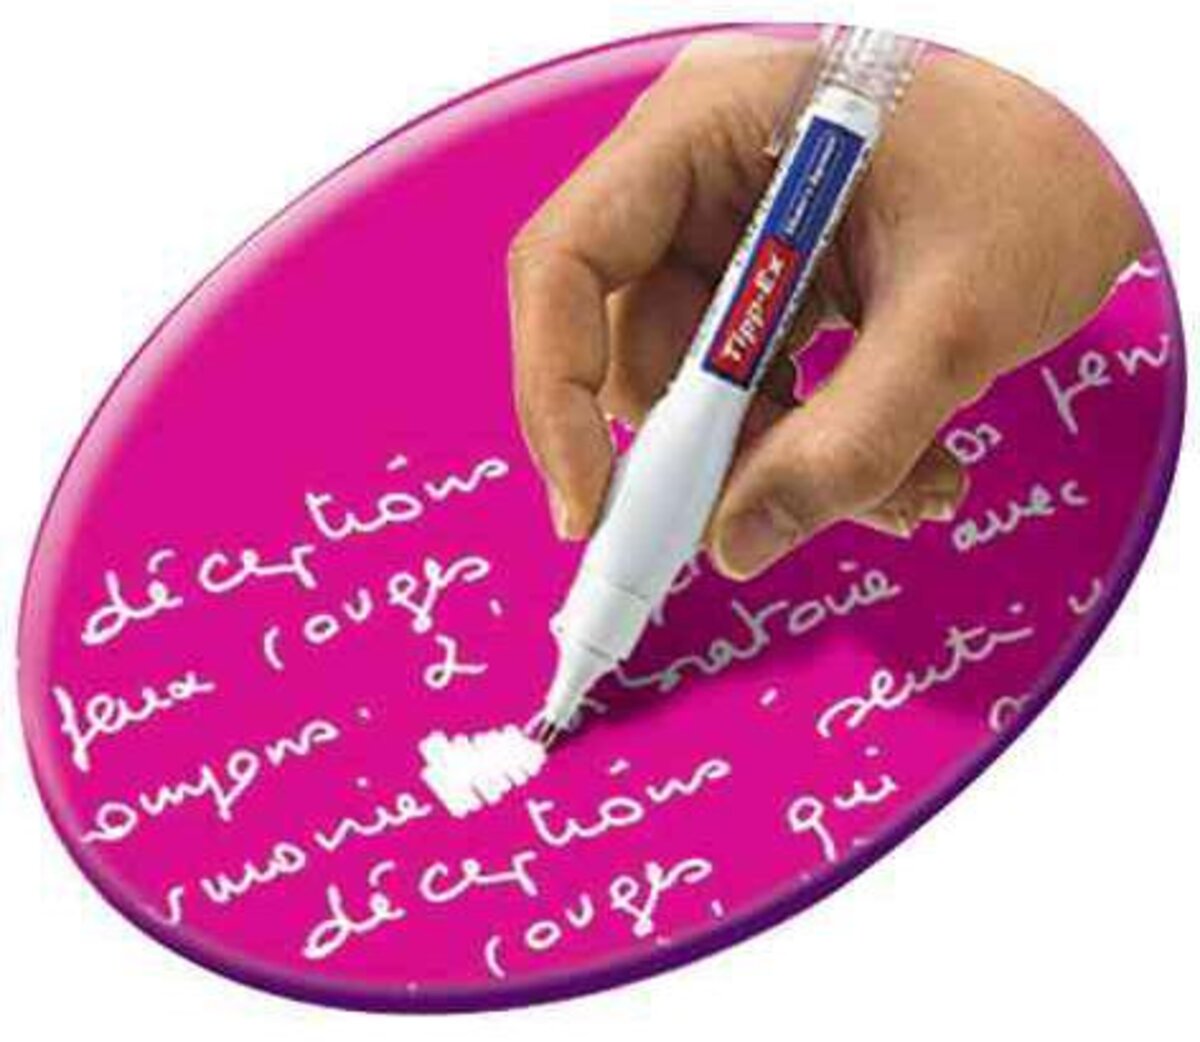 Liquide correcteur correcteur Shake n Squeeze Tipp-ex - 3 stylos